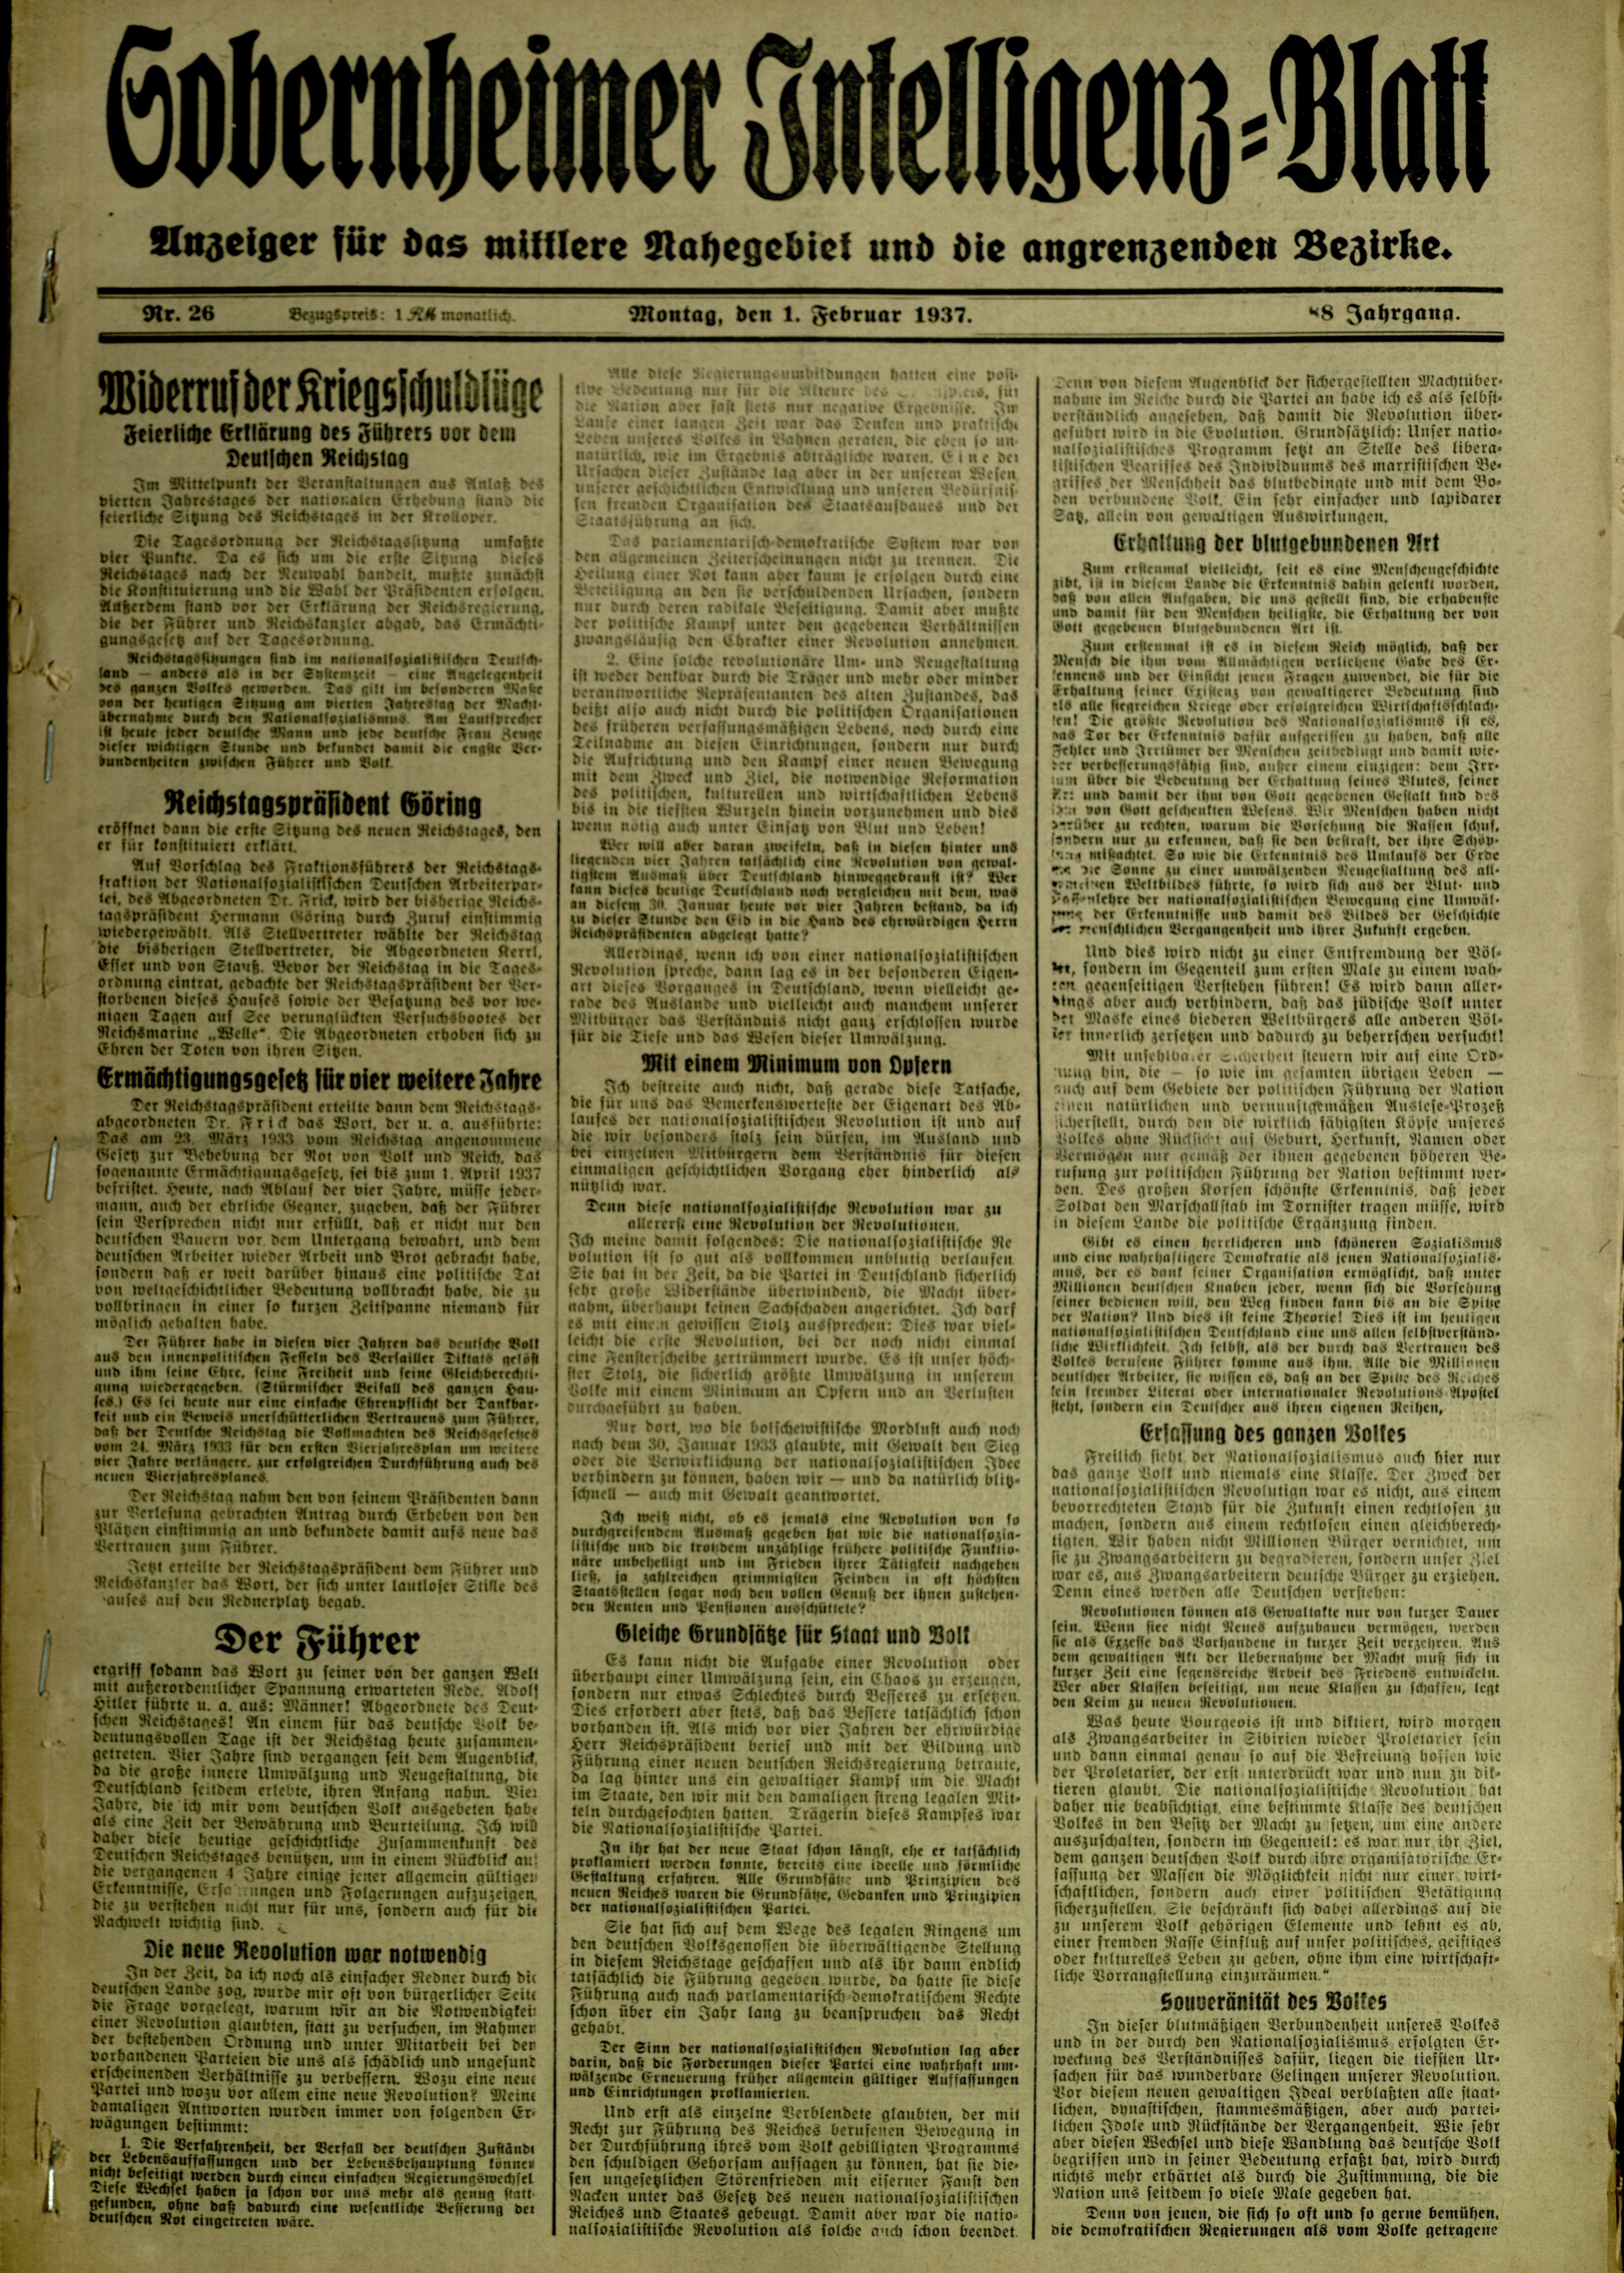 Zeitung: Sobernheimer Intelligenzblatt; Februar 1937, Jg. 88 Nr. 26 (Heimatmuseum Bad Sobernheim CC BY-NC-SA)